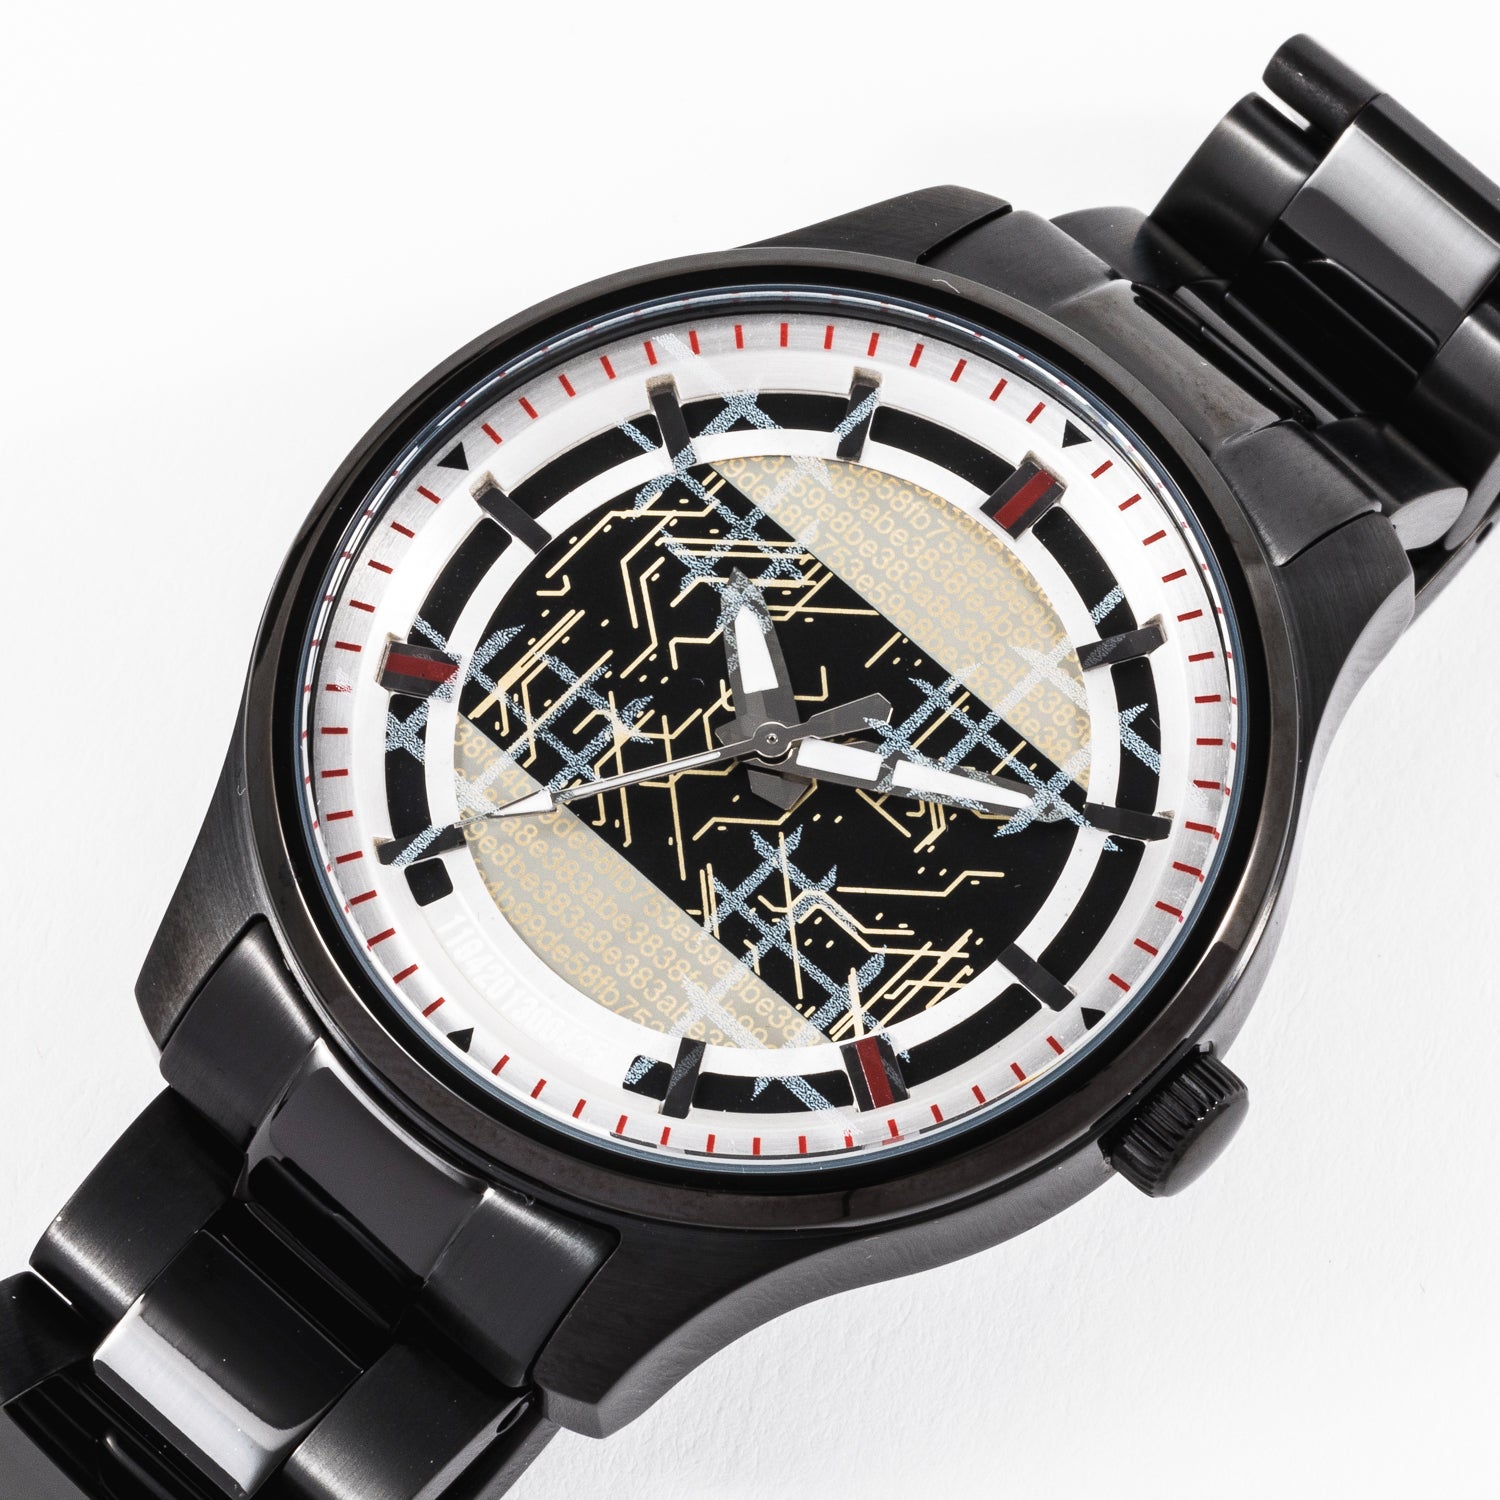 9S(ヨルハ九号S型) モデル 腕時計 NieR:Automata Ver1.1a NieR 